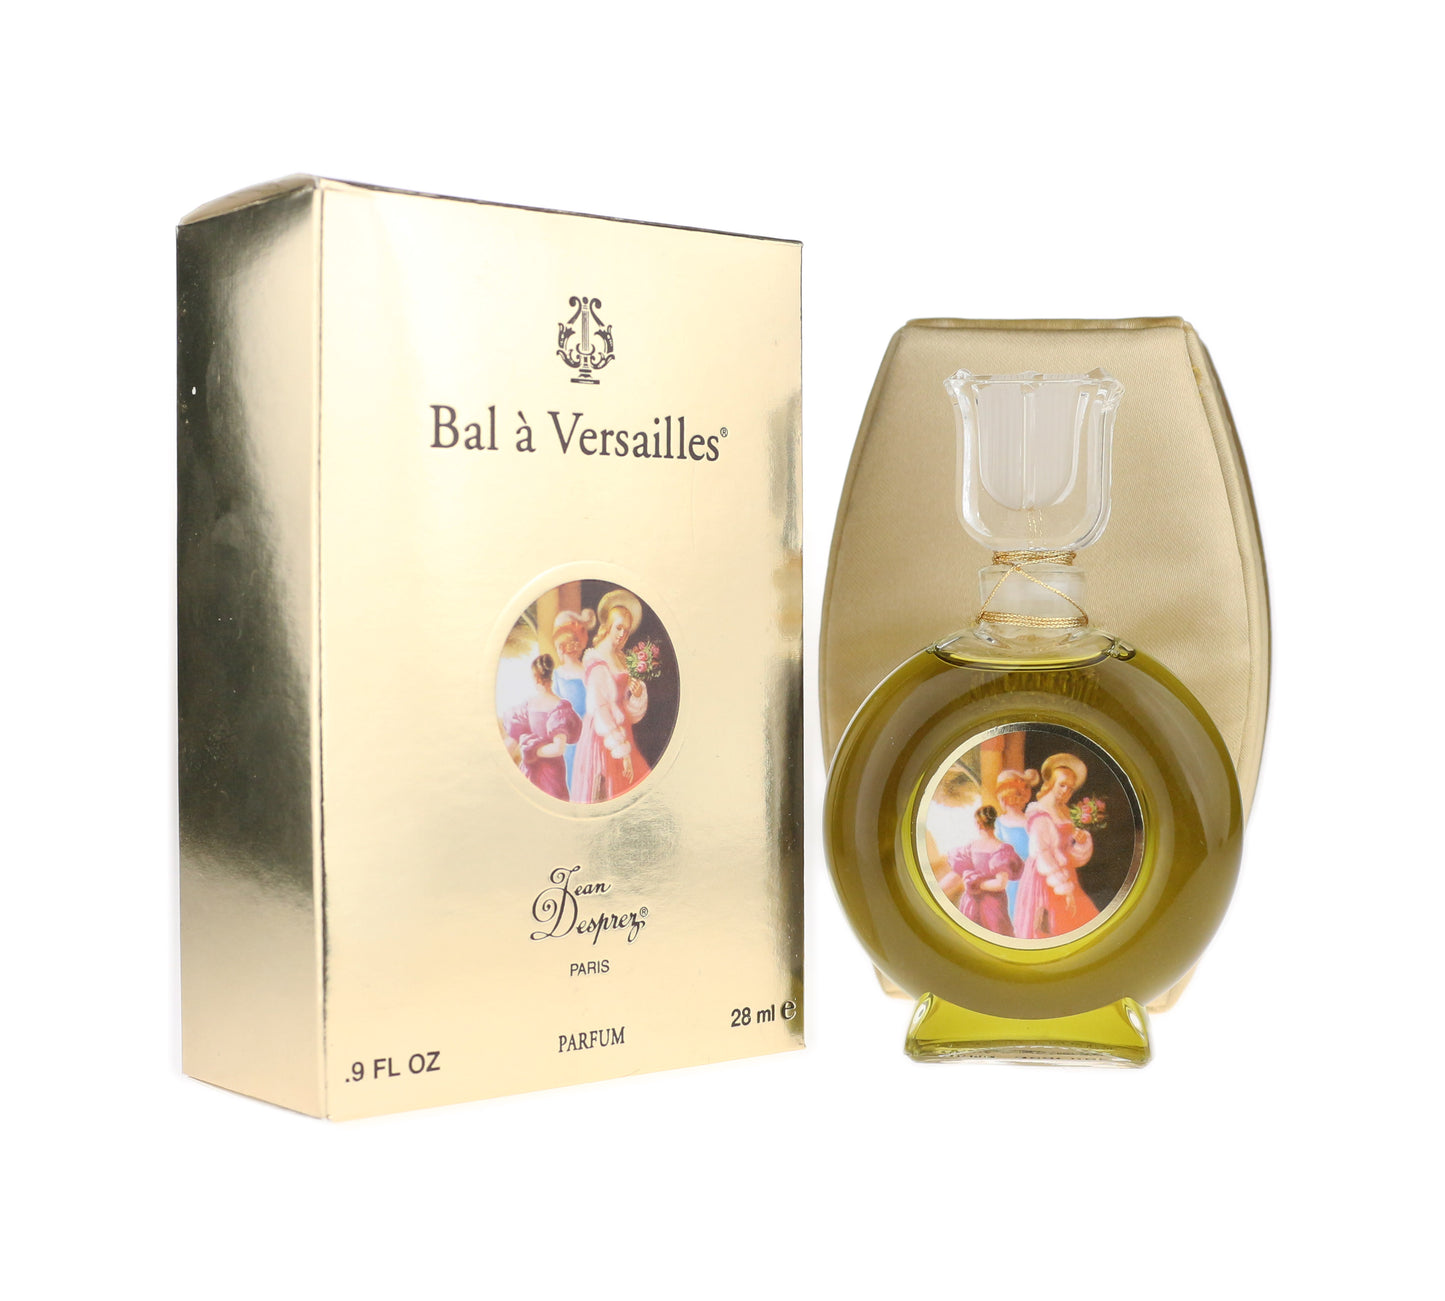 Jean Desprez 'Bal a Versailles' Parfum Splash 0.9oz/28ml New In Box(Pure Parfum)